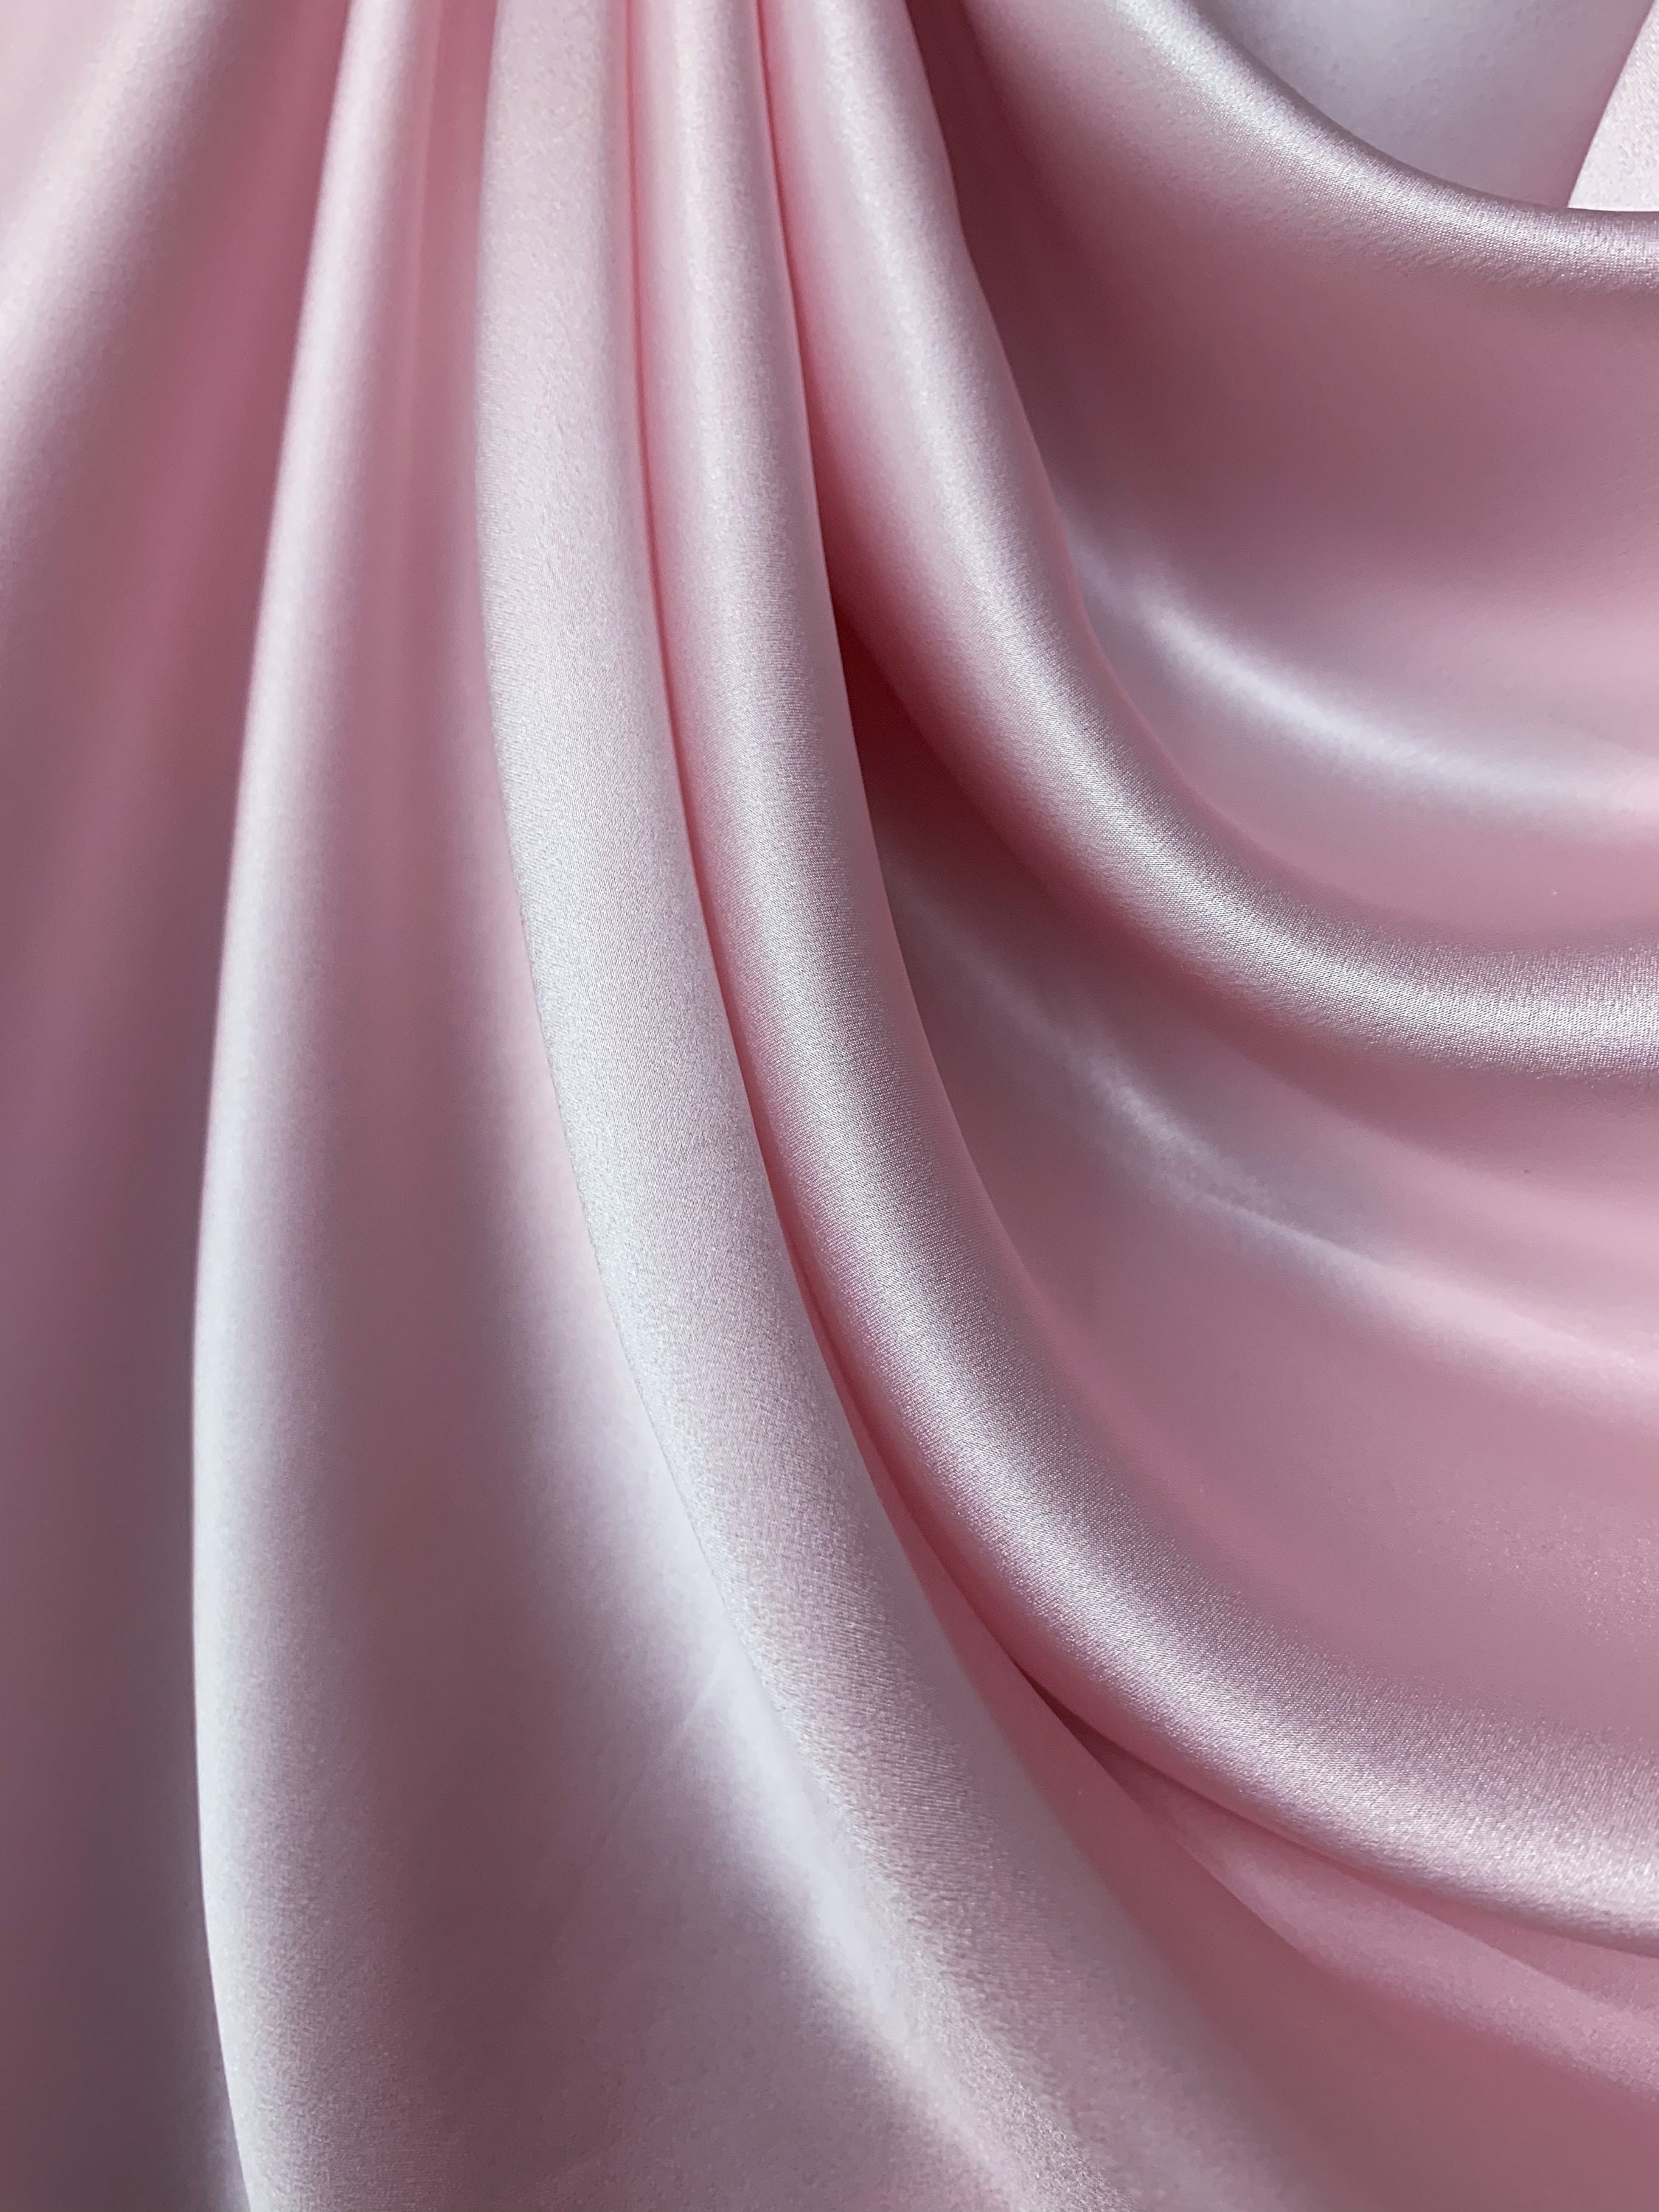 Pink Silk Fabric 